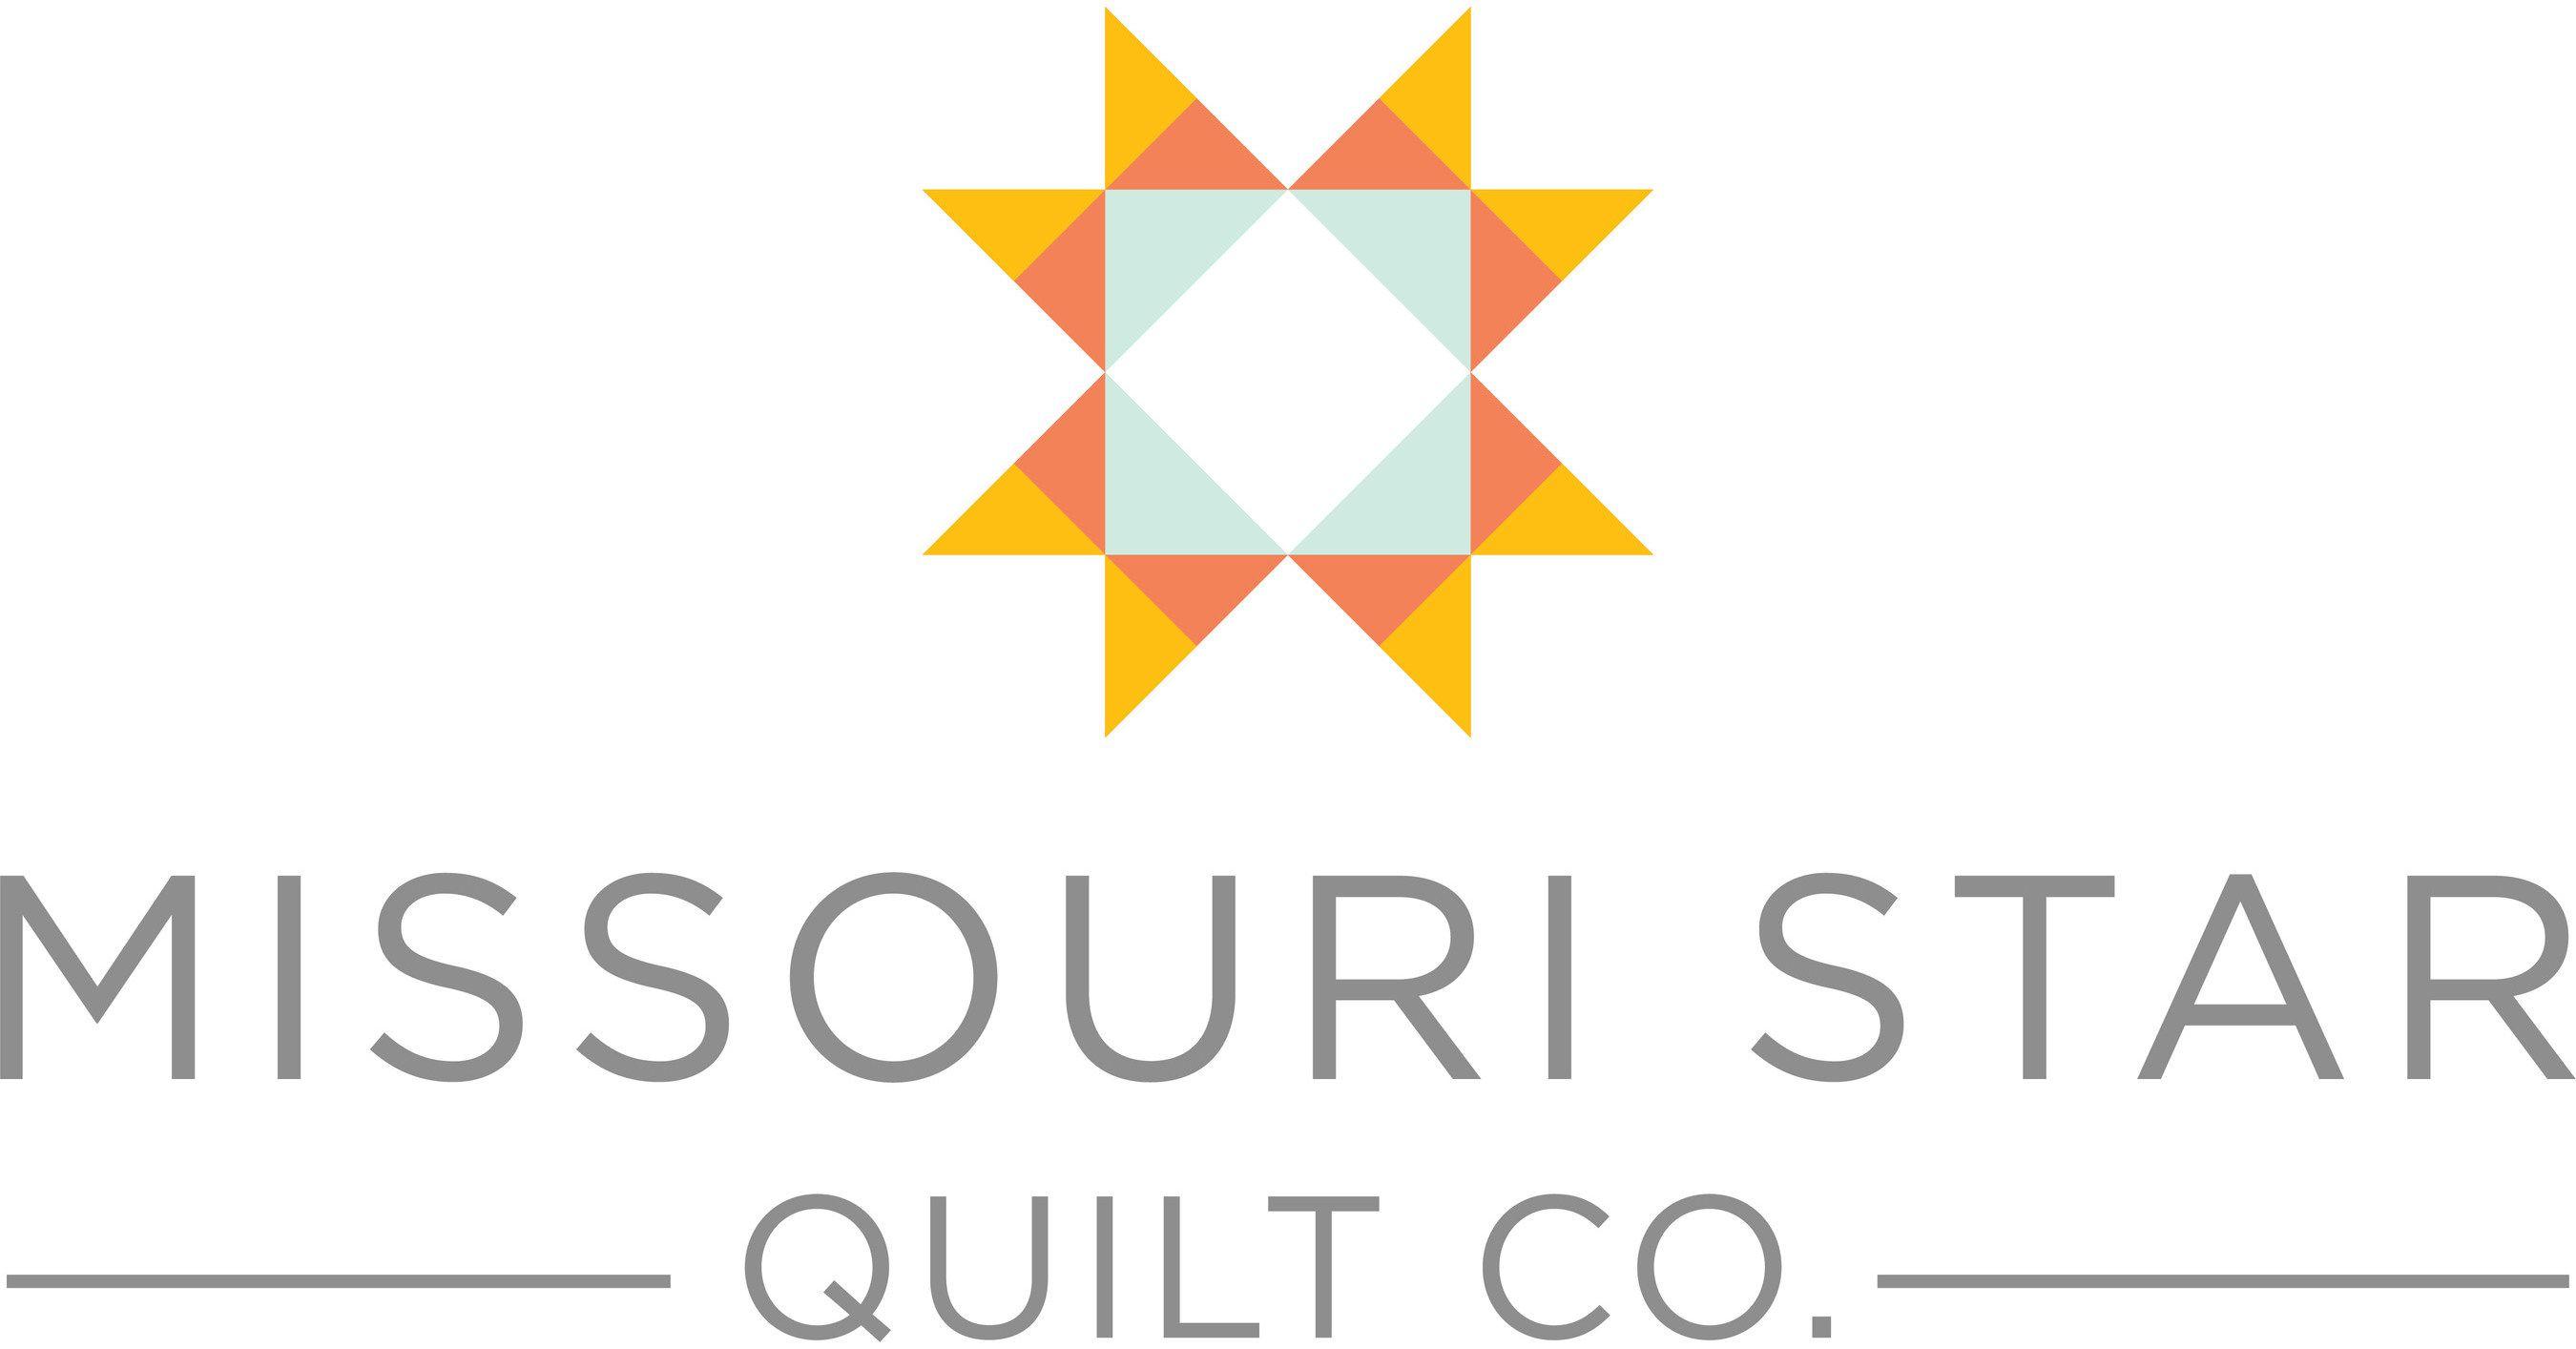 Quilt Logo - Some Companies Grow Jobs in America, Brick by Brick. Missouri Star